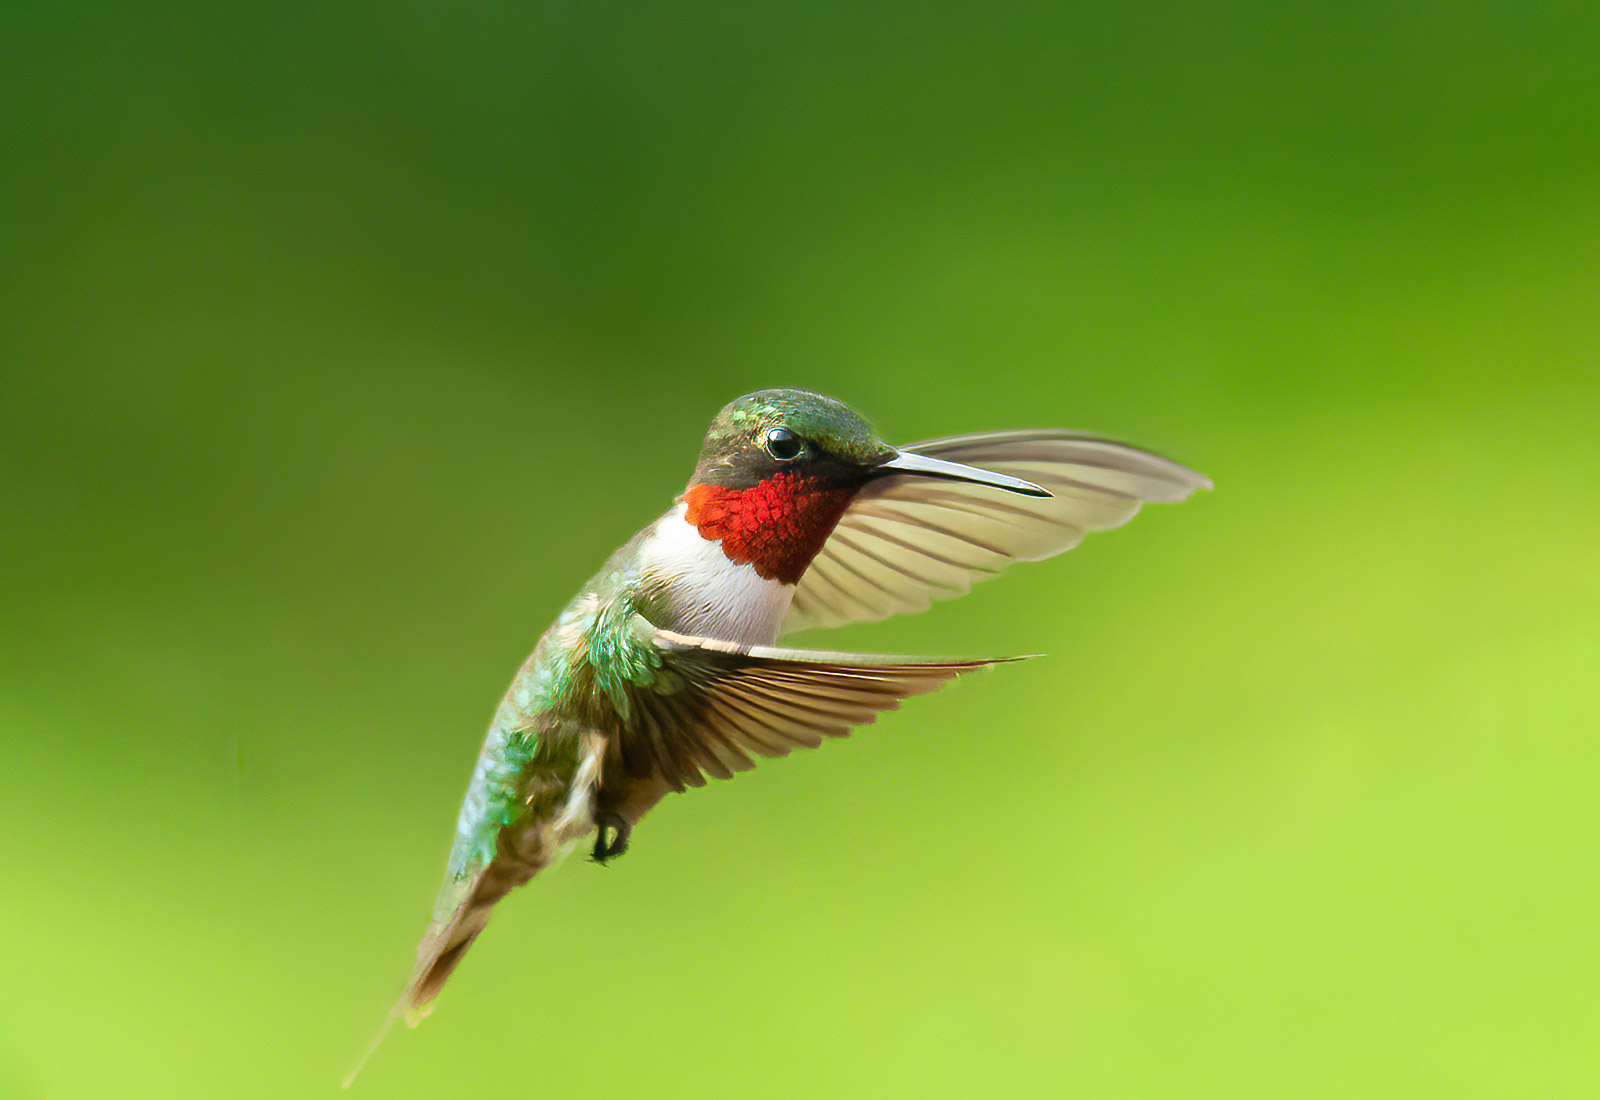 Male Ruby-throated Hummingbird in flight